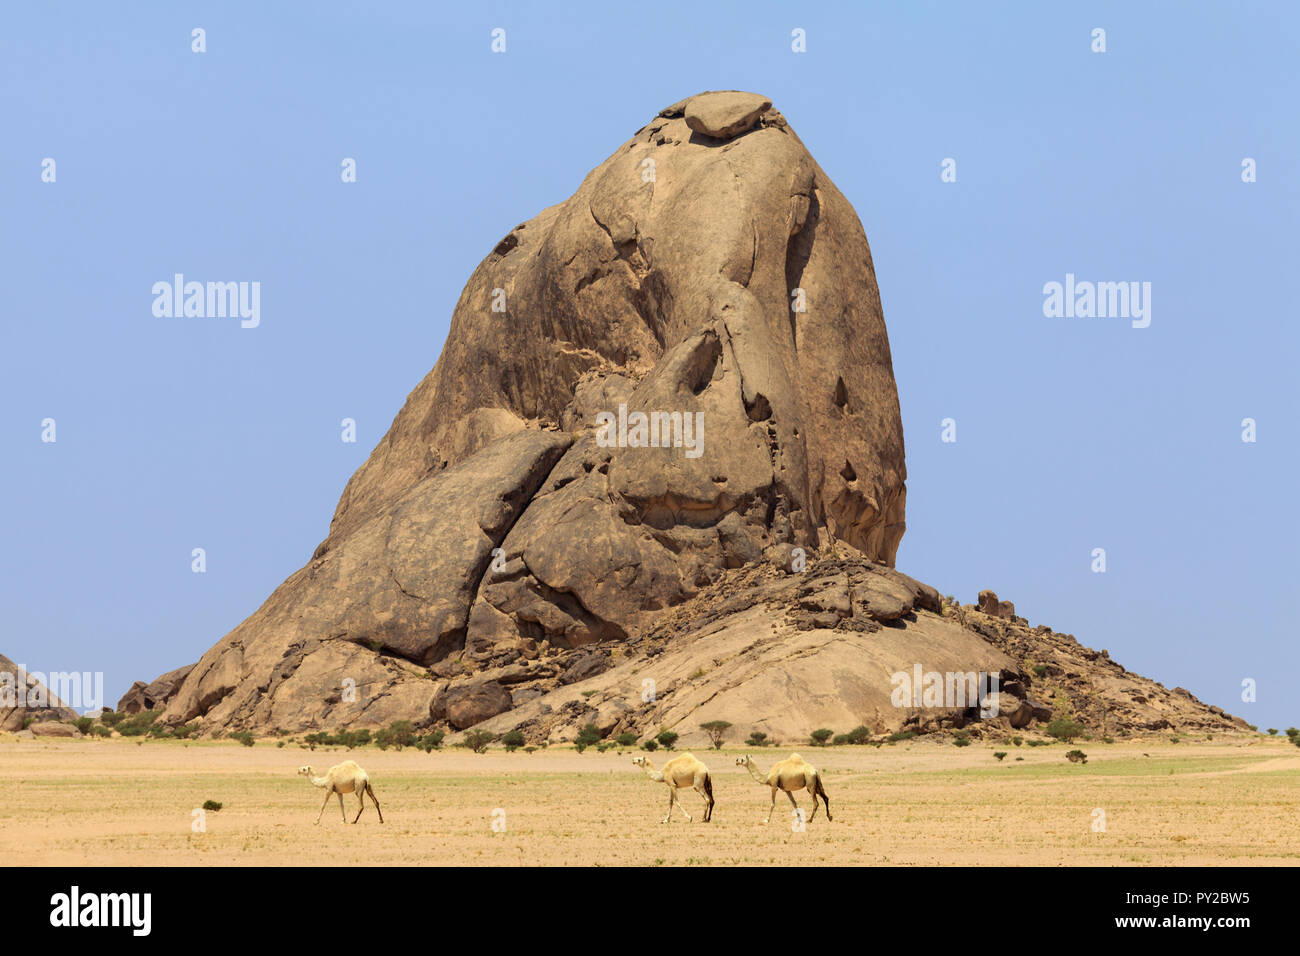 Kamele in der Wüste in der Nähe eine Felsformation, Saudi-Arabien Stockfoto